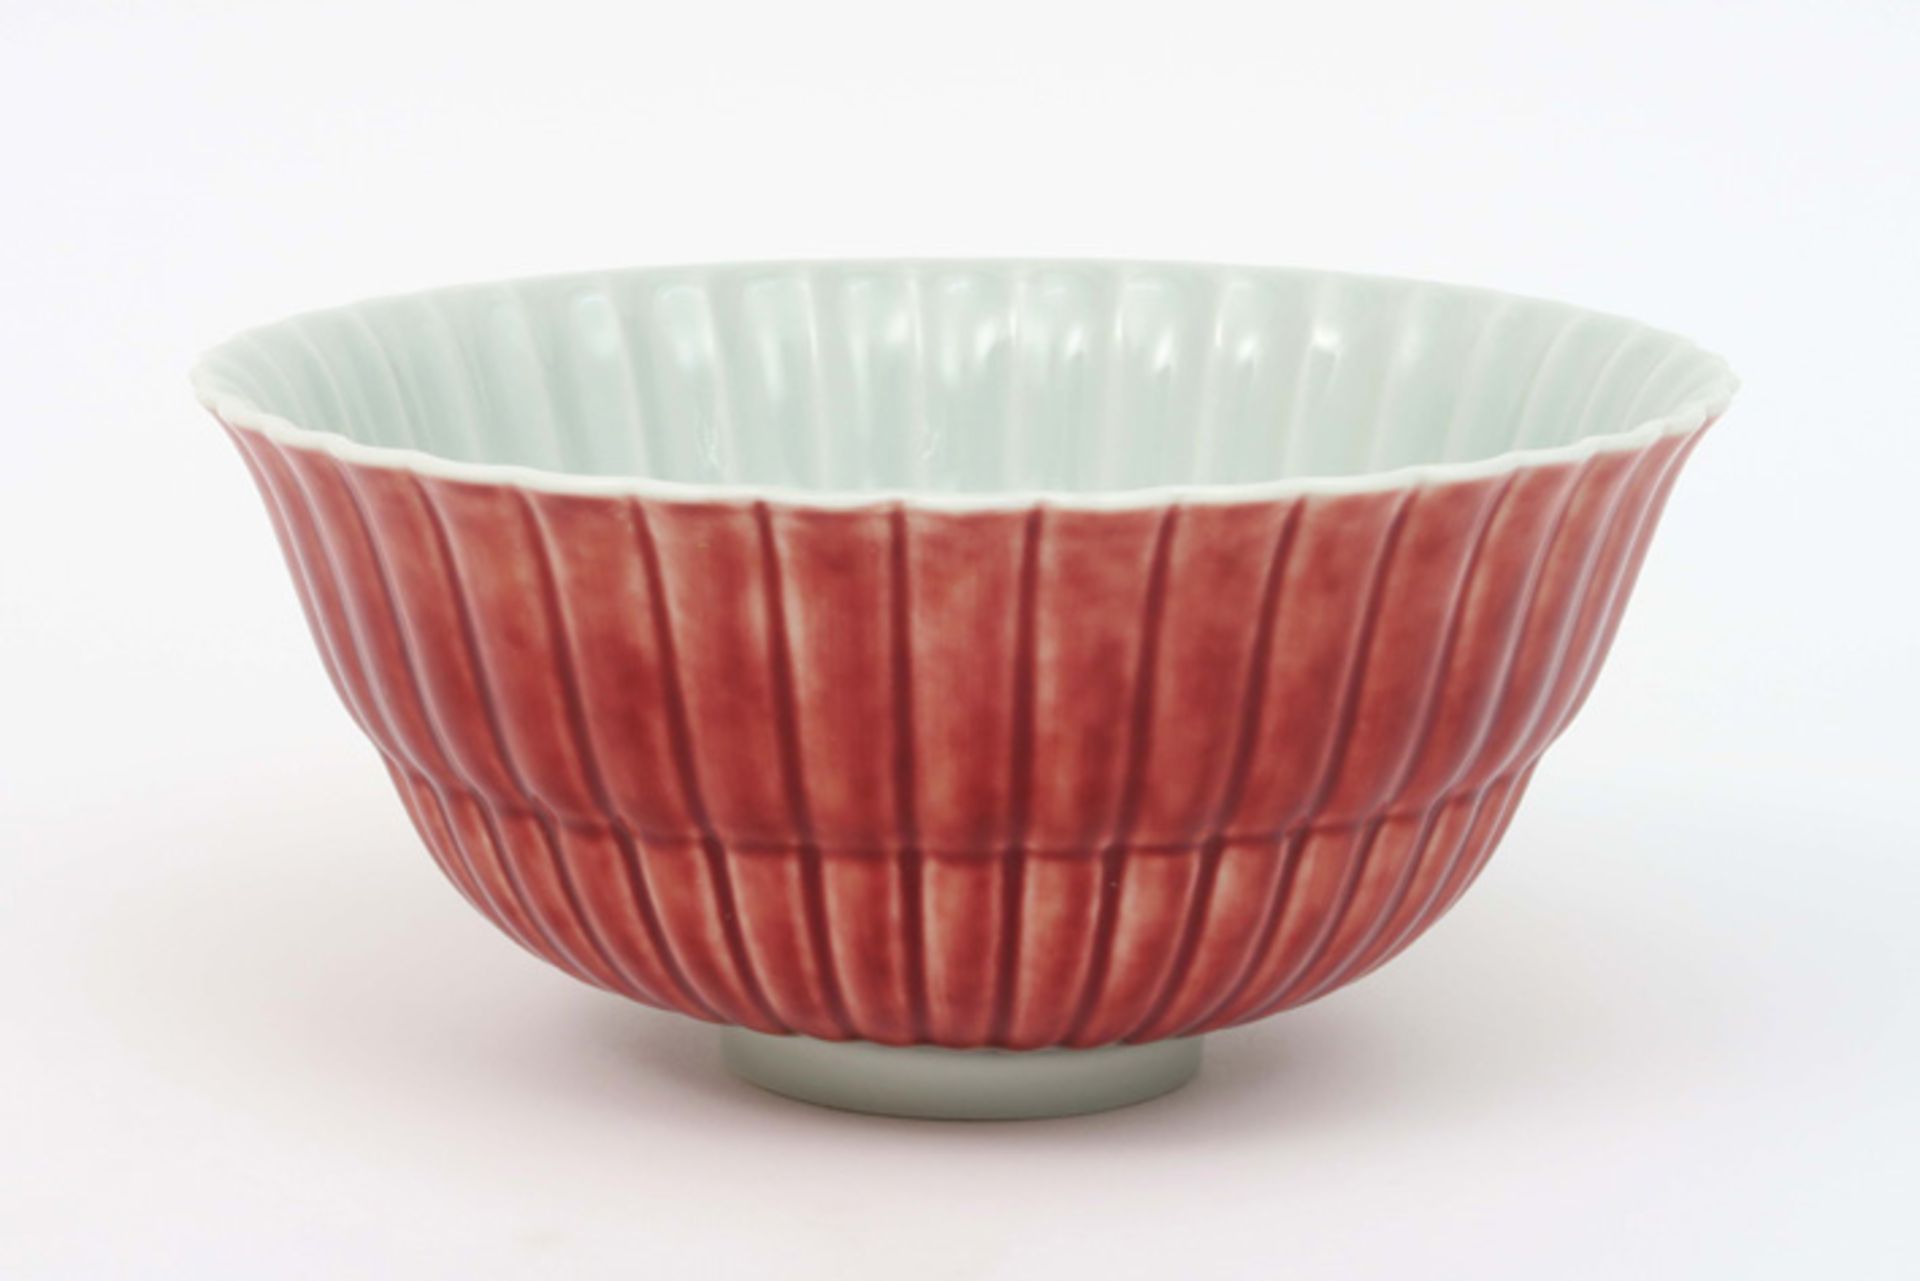 scalloped lotusflower shaped bowl in marked Royal Kopenhagen porcelain with embossed ribs||Bowl in d - Bild 2 aus 5